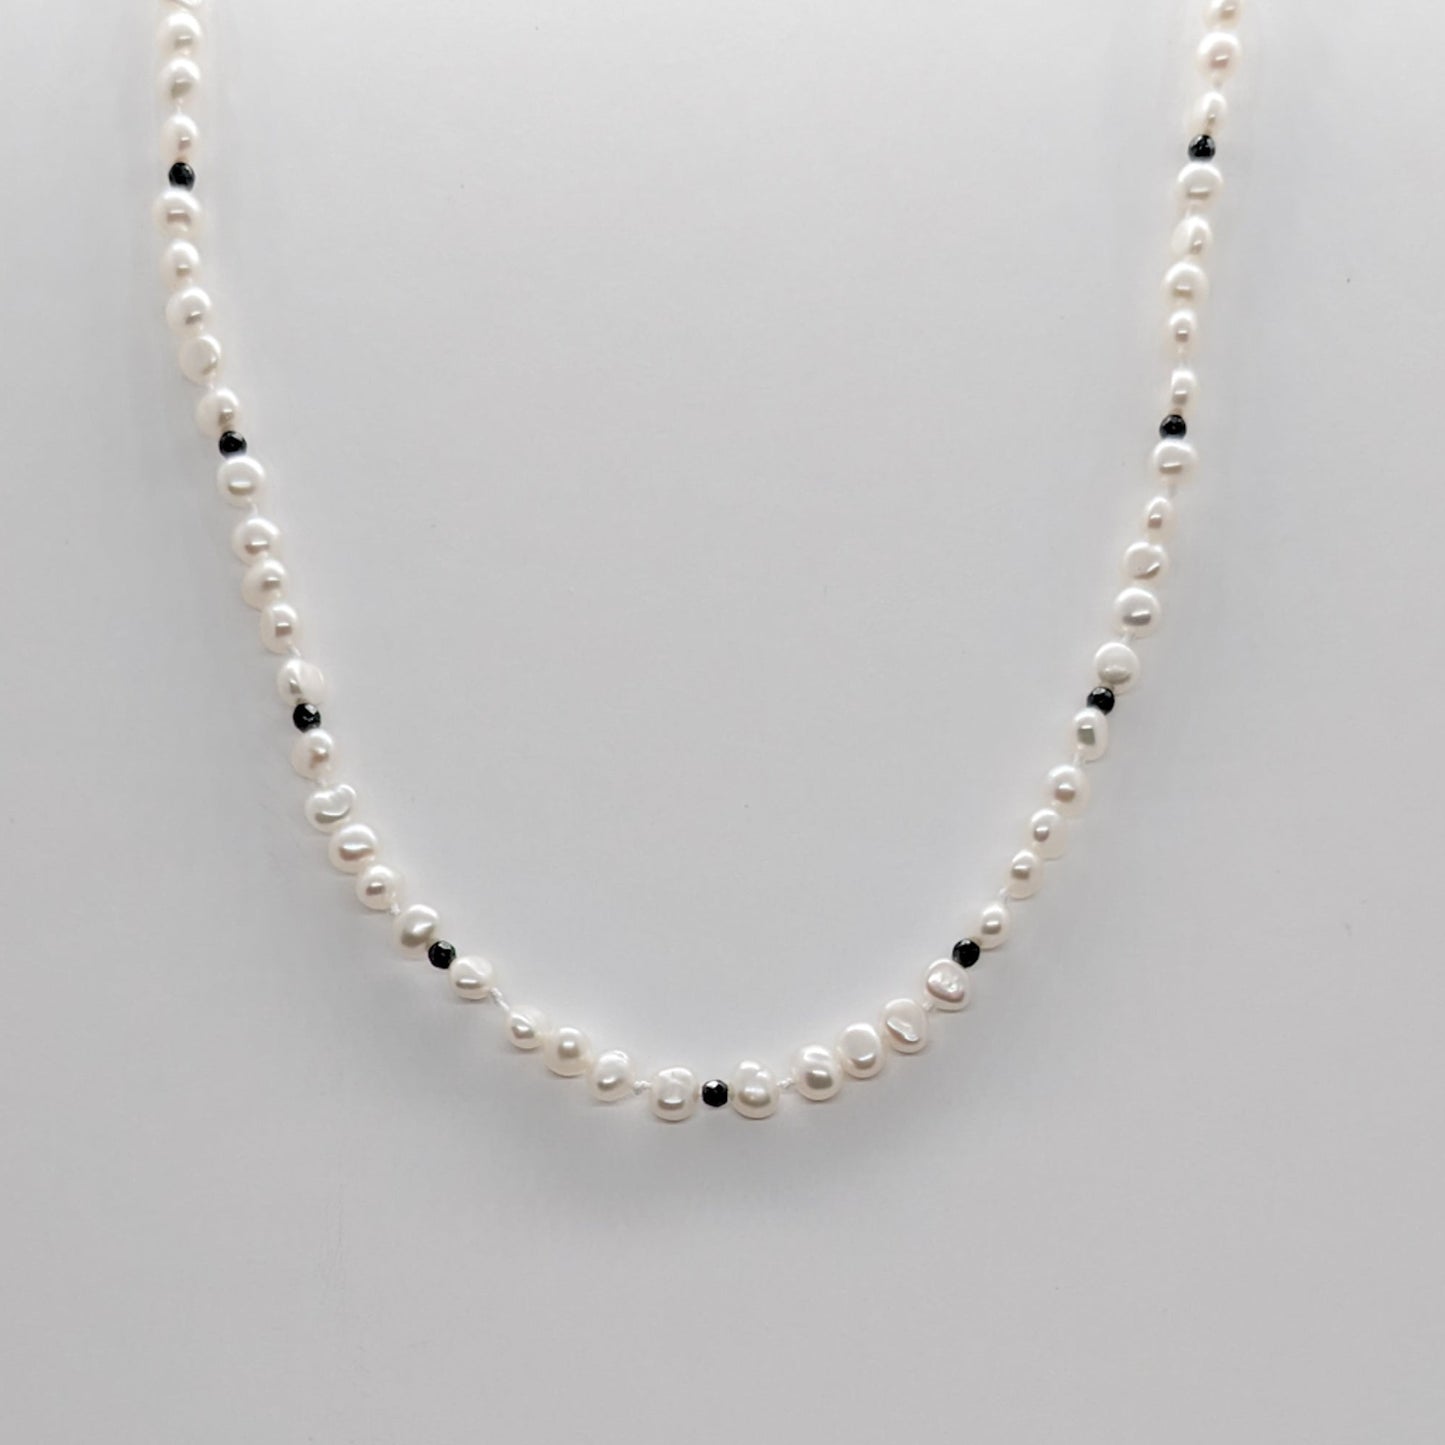 Collier de perles keshis et perles hématites